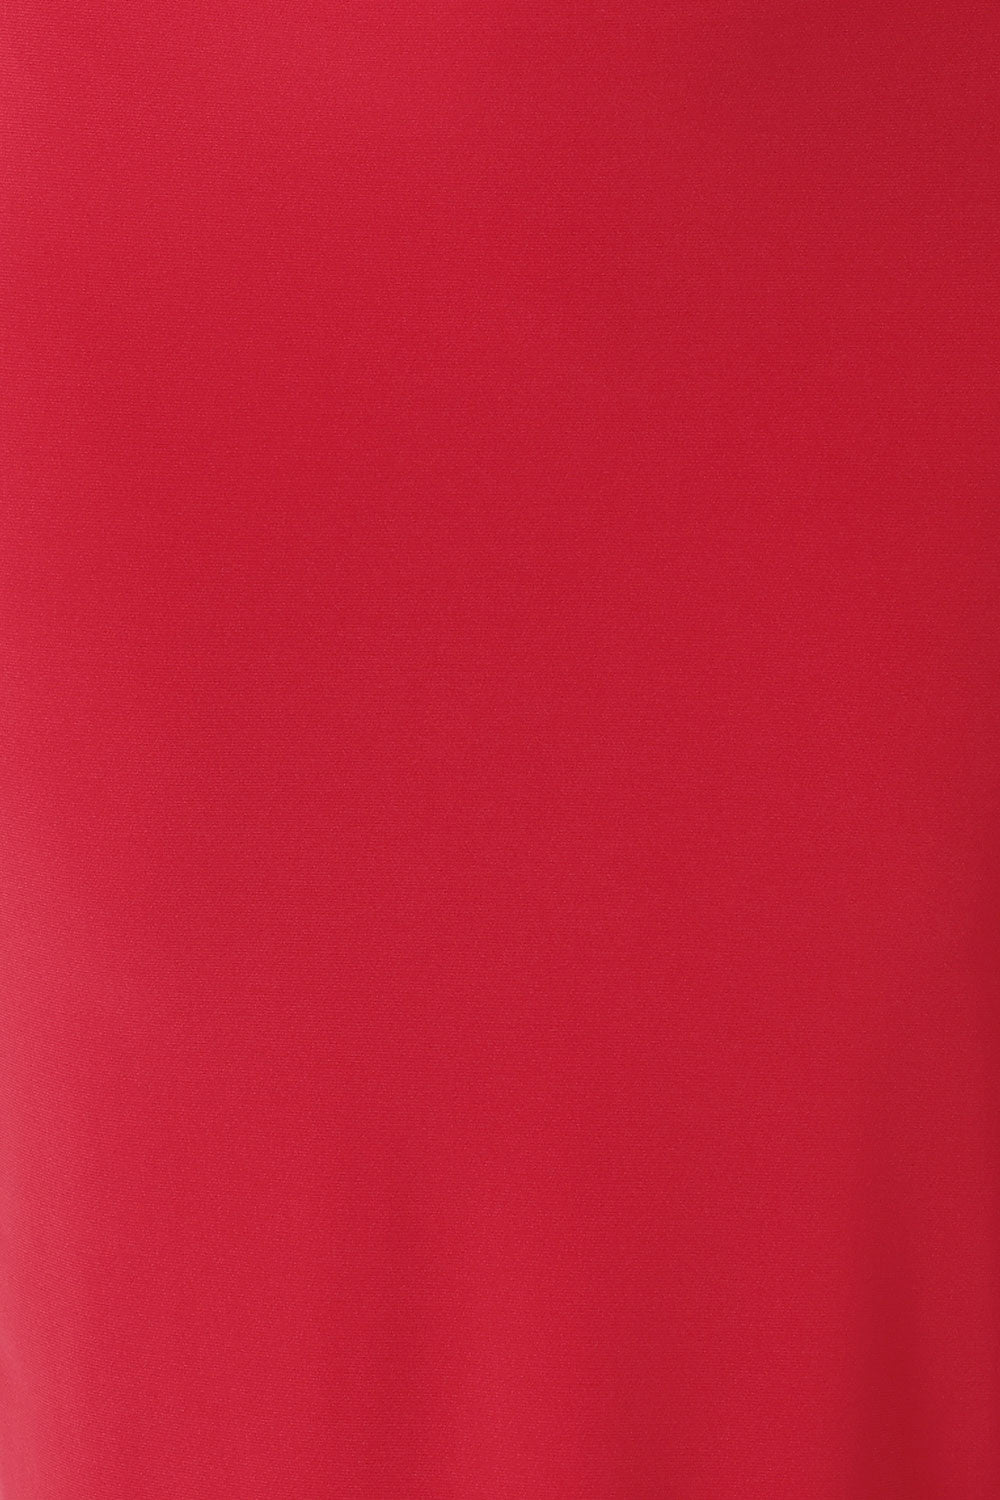 Raspberry Fuchsia fabric material in soft jersey for Womens fashion brand Leina & Fleur. Designed in Australia size 8 - 24. 